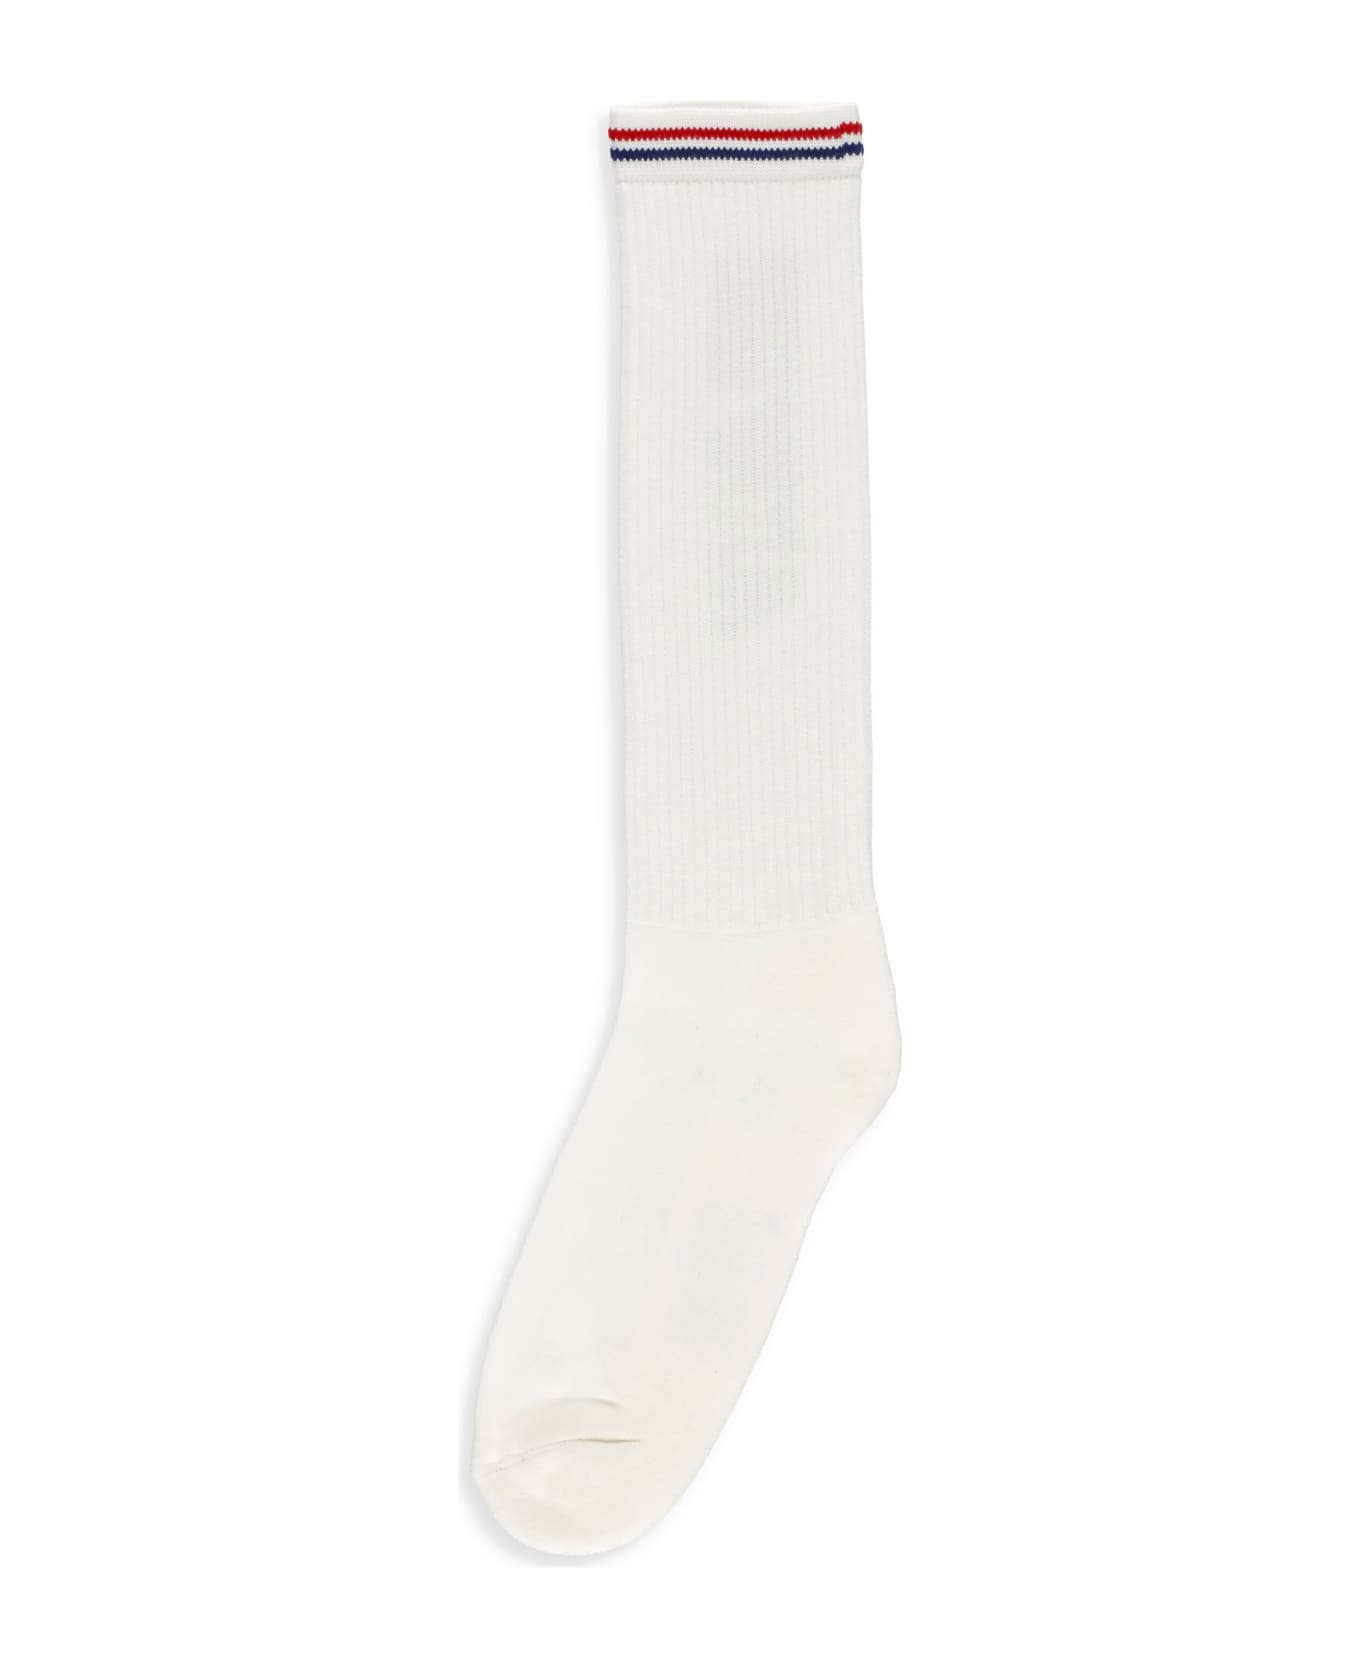 Autry Cotton Long Socks - Wht/flag 靴下